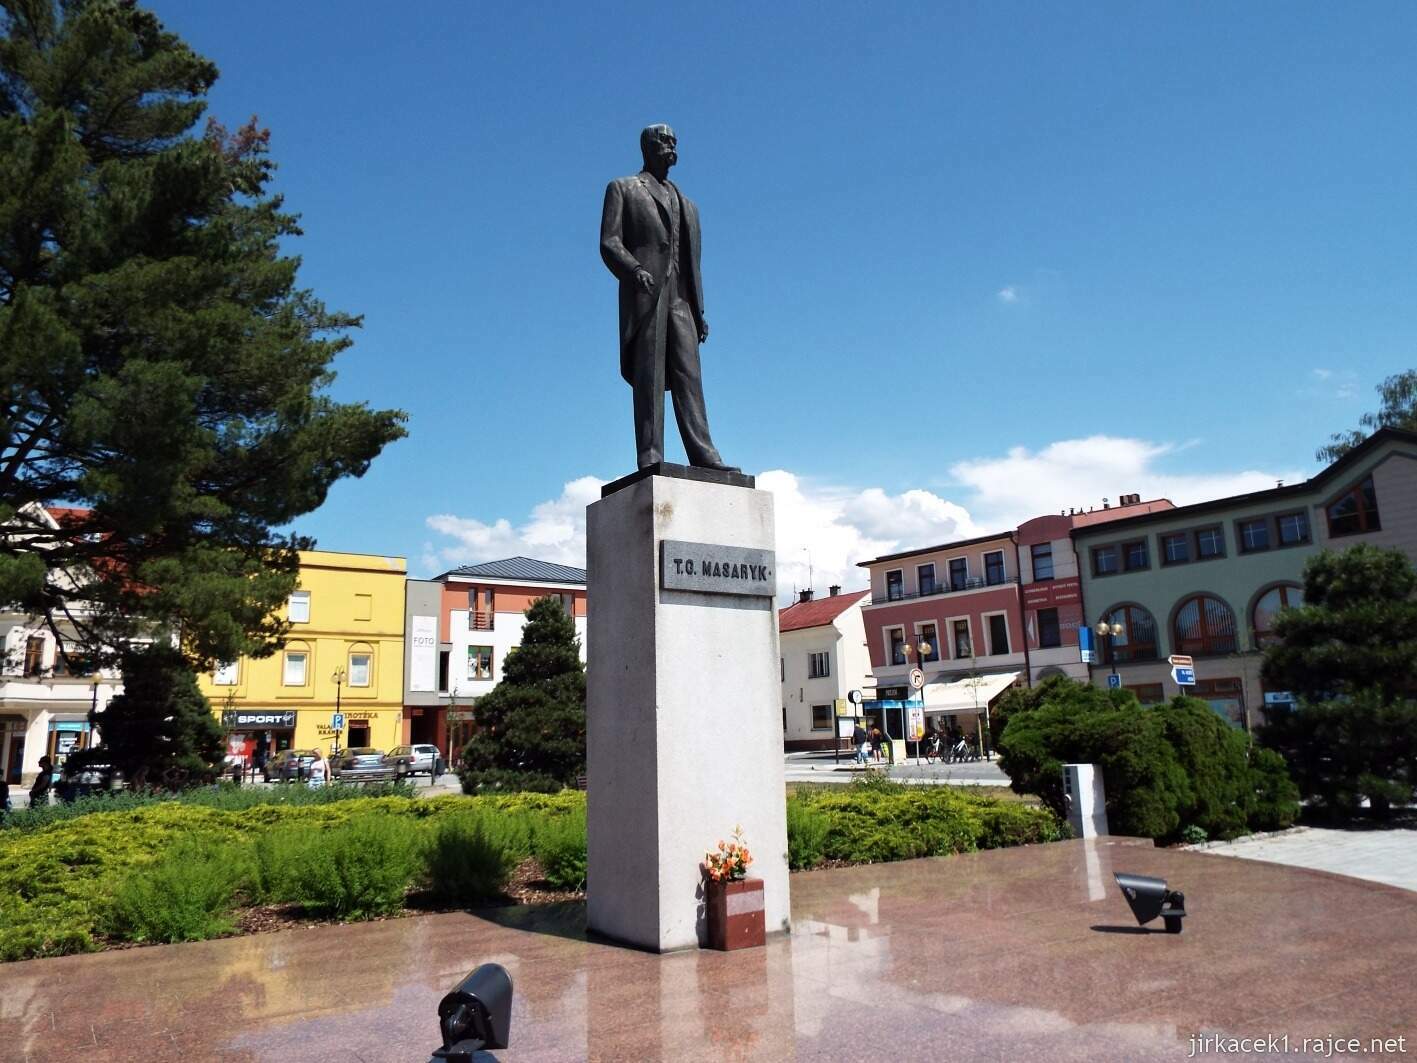 004 - Rožnov pod Radhoštěm - Masarykovo náměstí 18 - socha Tomáše Garika Masaryka